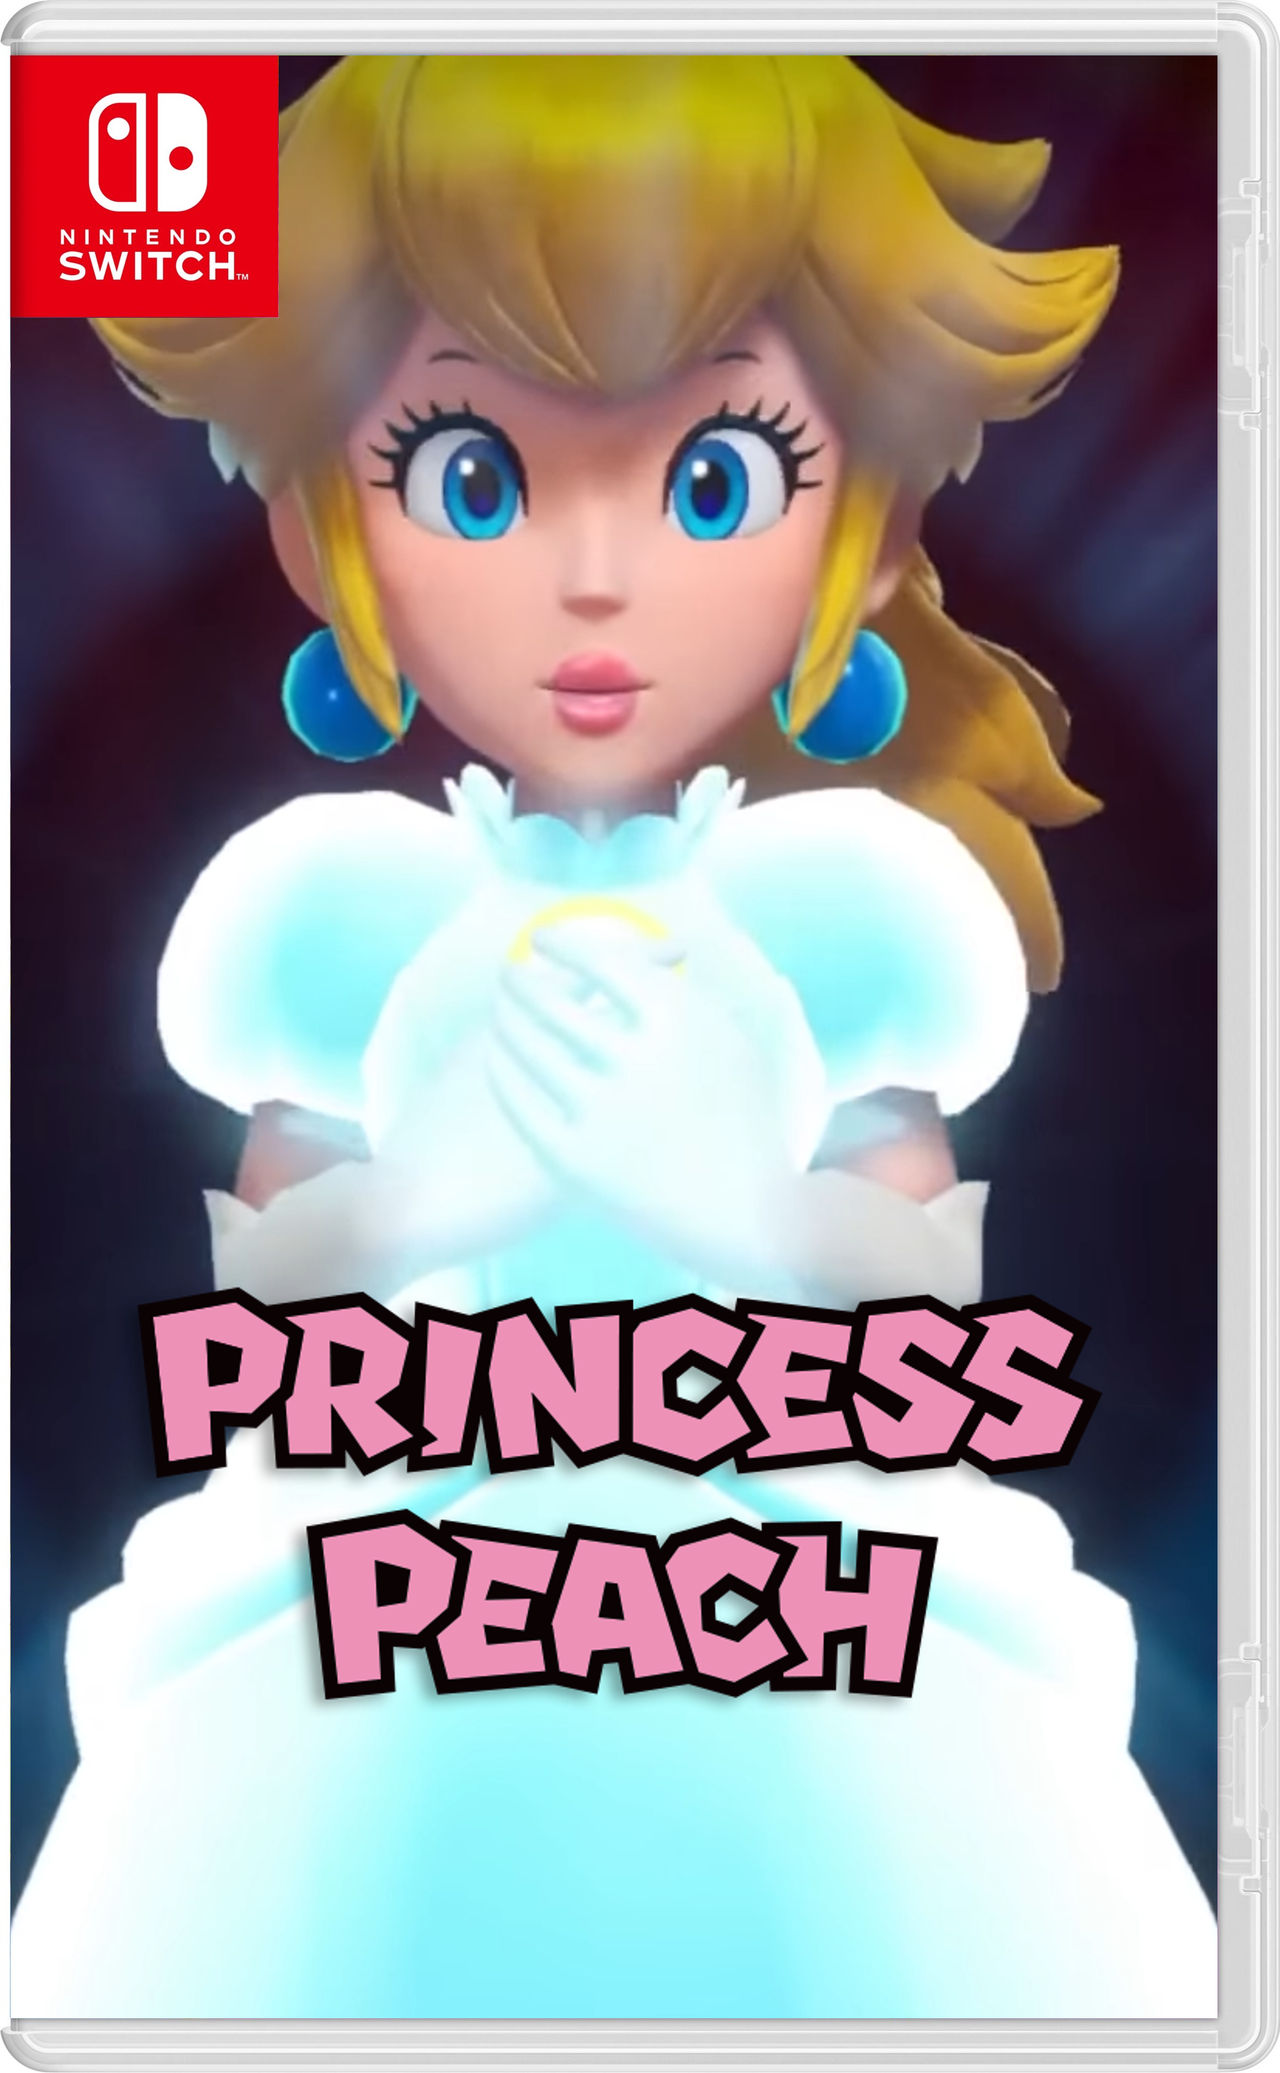 Princess Peach for Nintendo Switch boxart by Garpikacars12 on DeviantArt